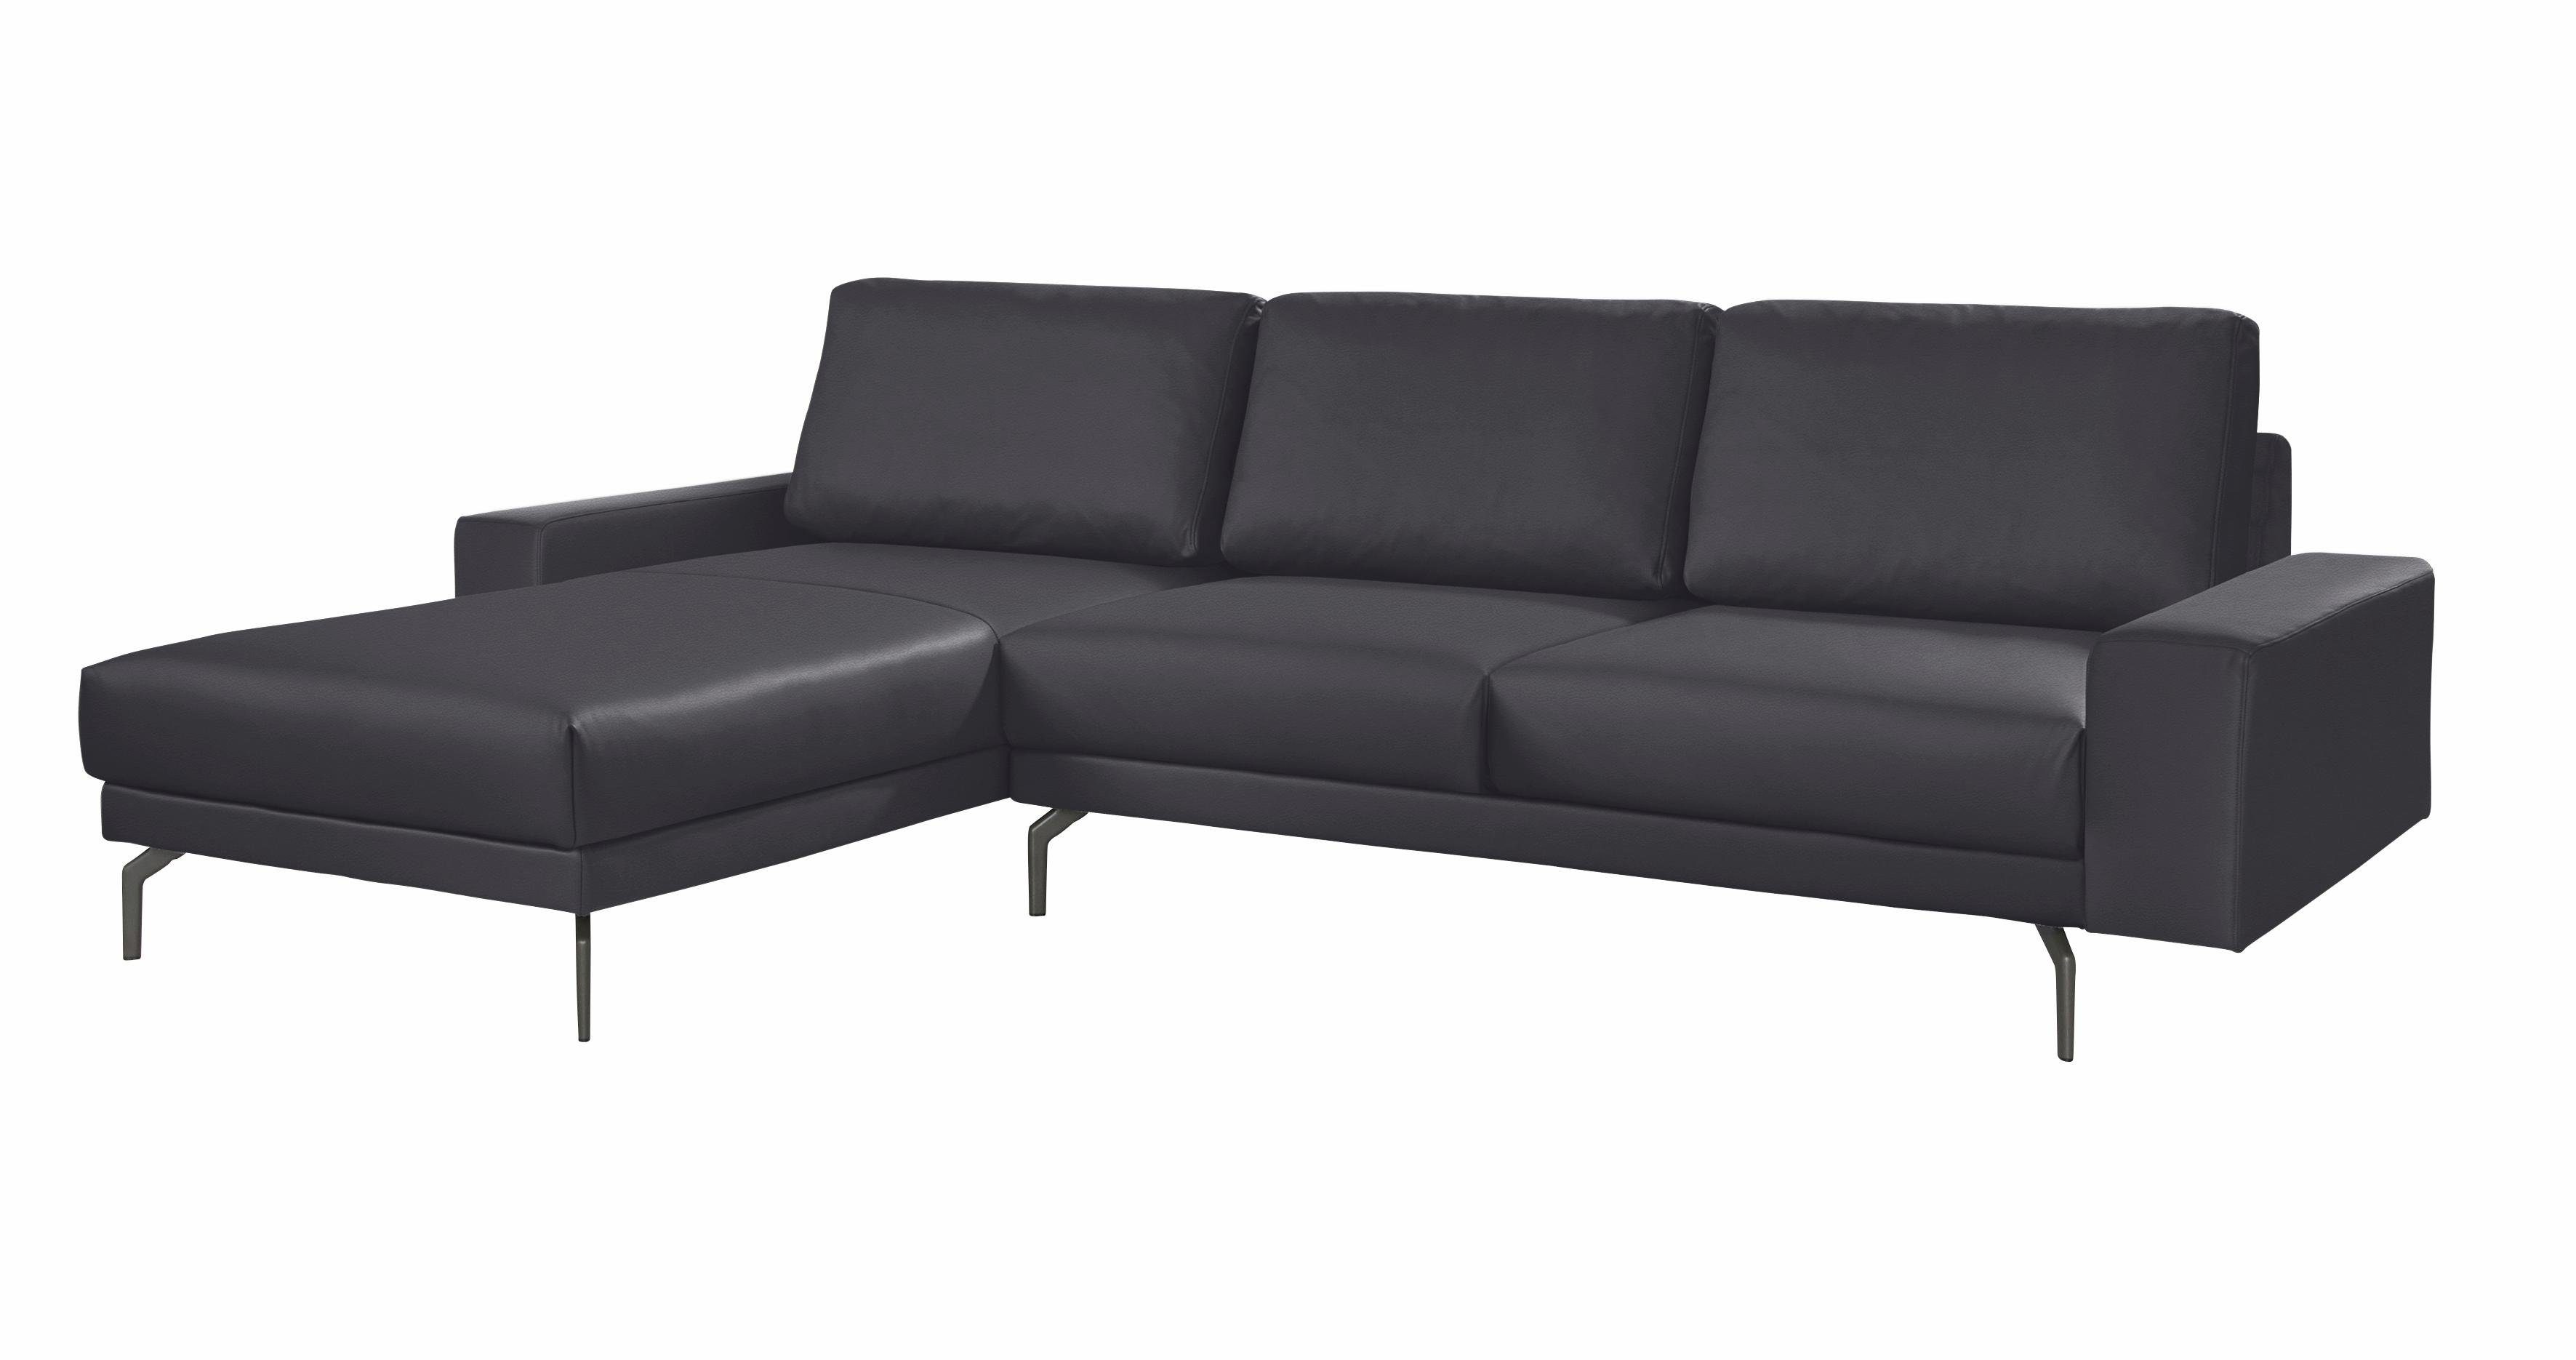 Ecksofa und hs.450, umbragrau, 294 Breite hülsta in sofa niedrig, Alugussfüße breit Armlehne cm